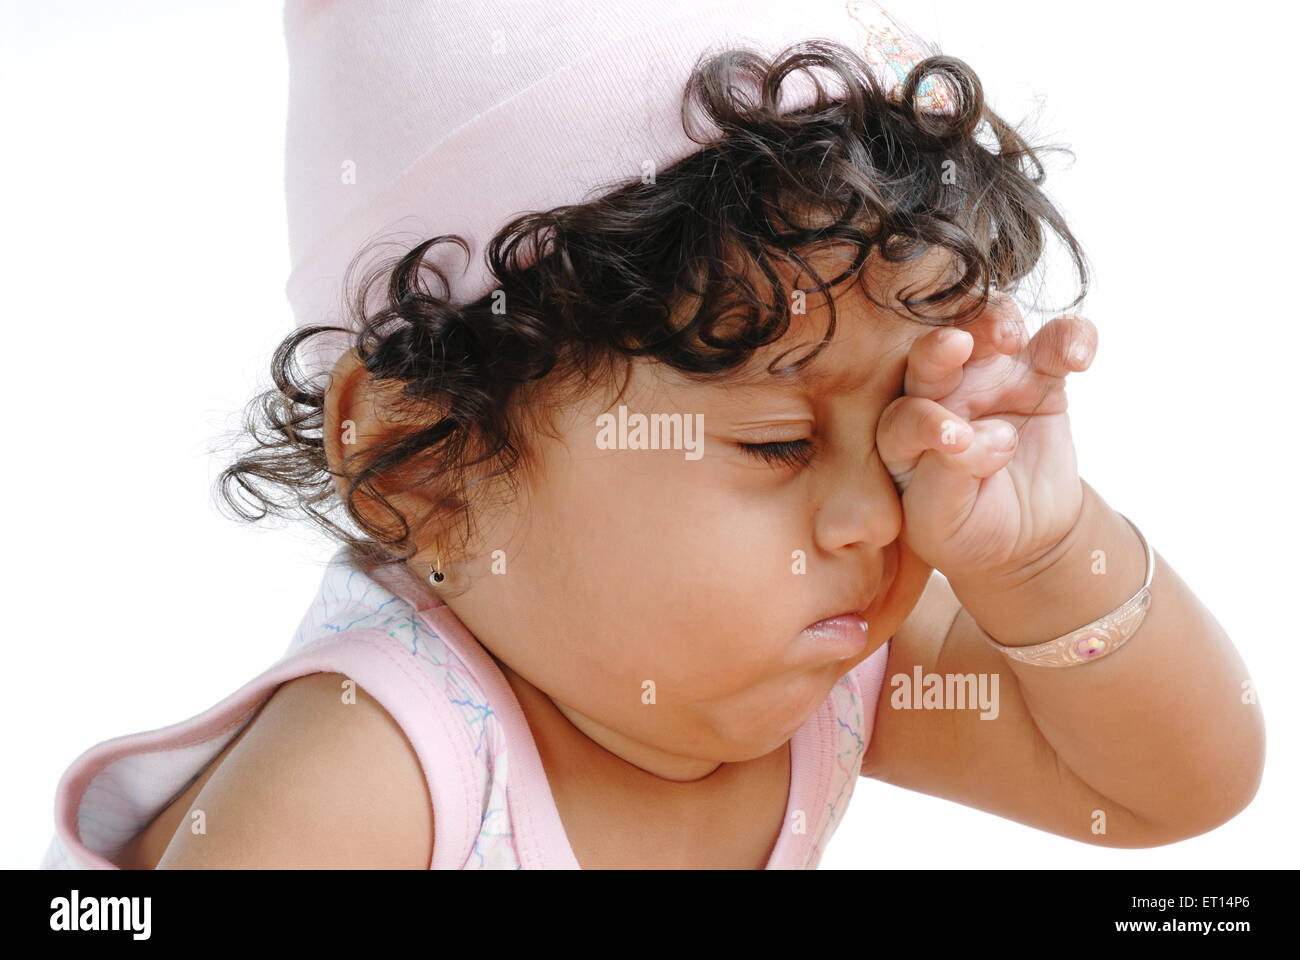 Baby boy rubbing eye MR#719C Stock Photo